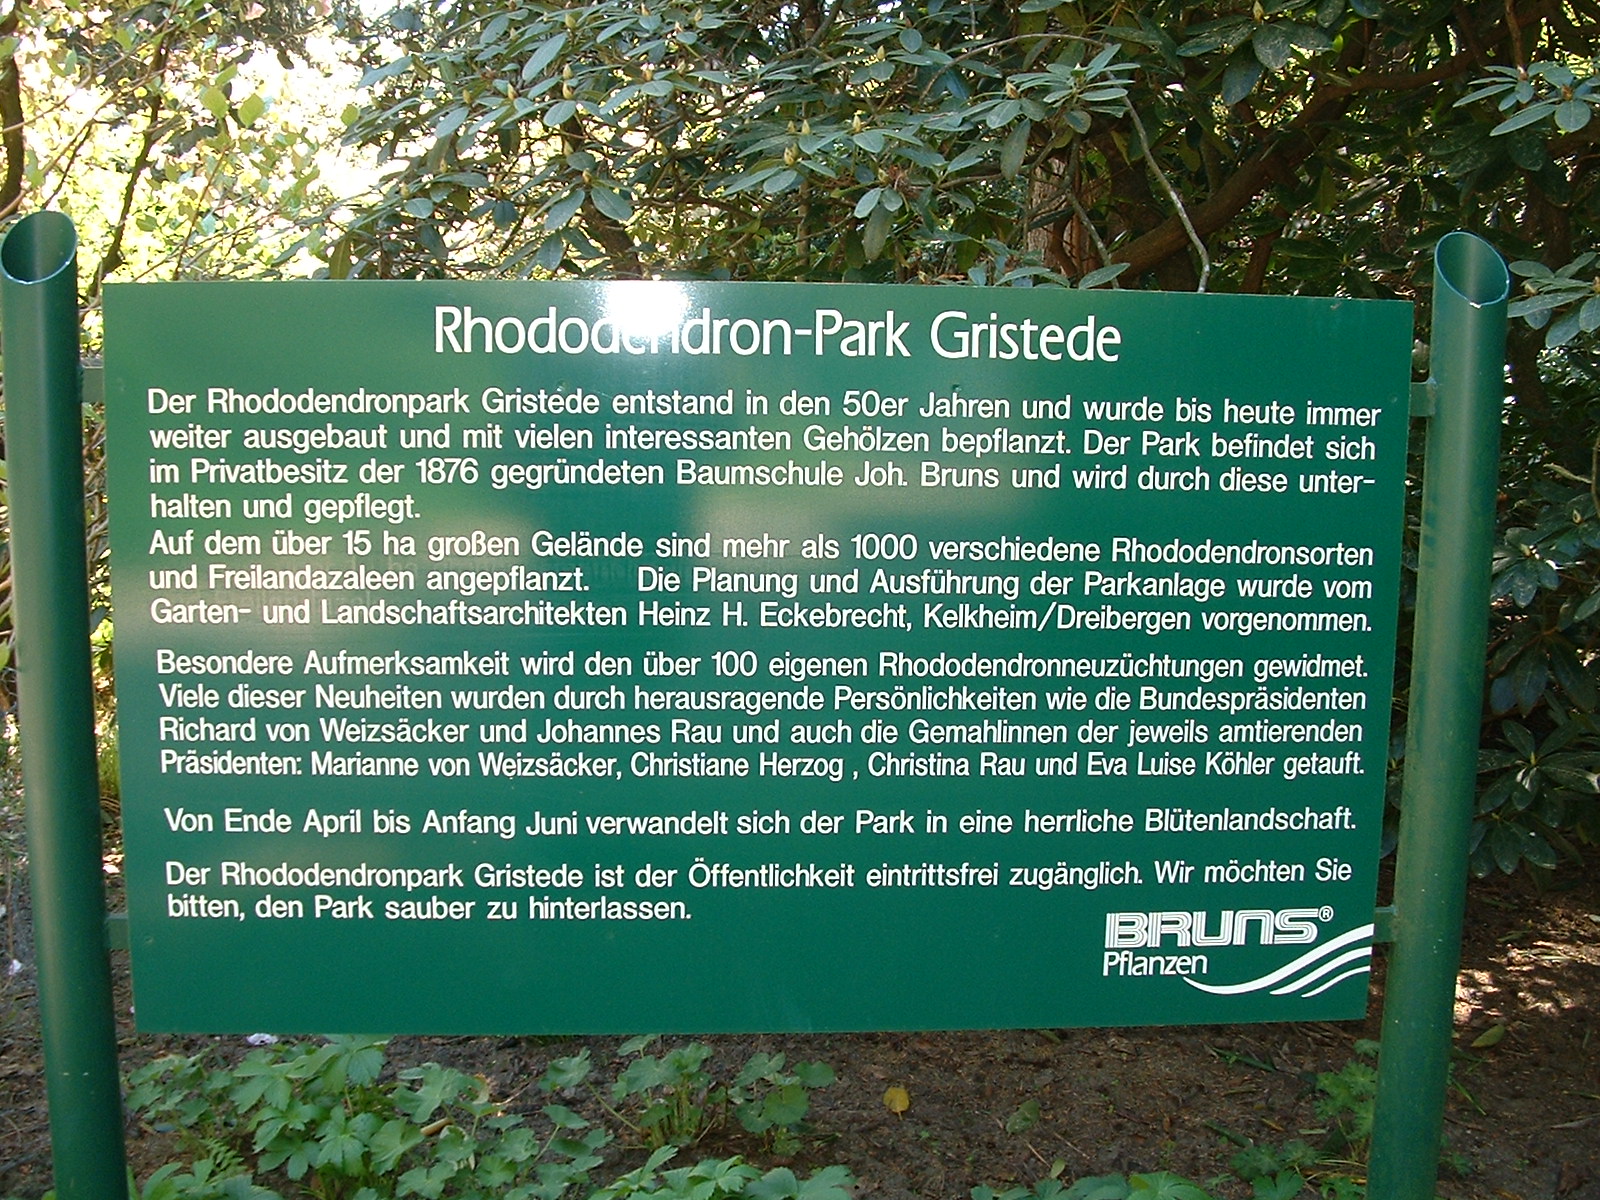 Bruns Pflanzen - Rhododendron-Park Gristede